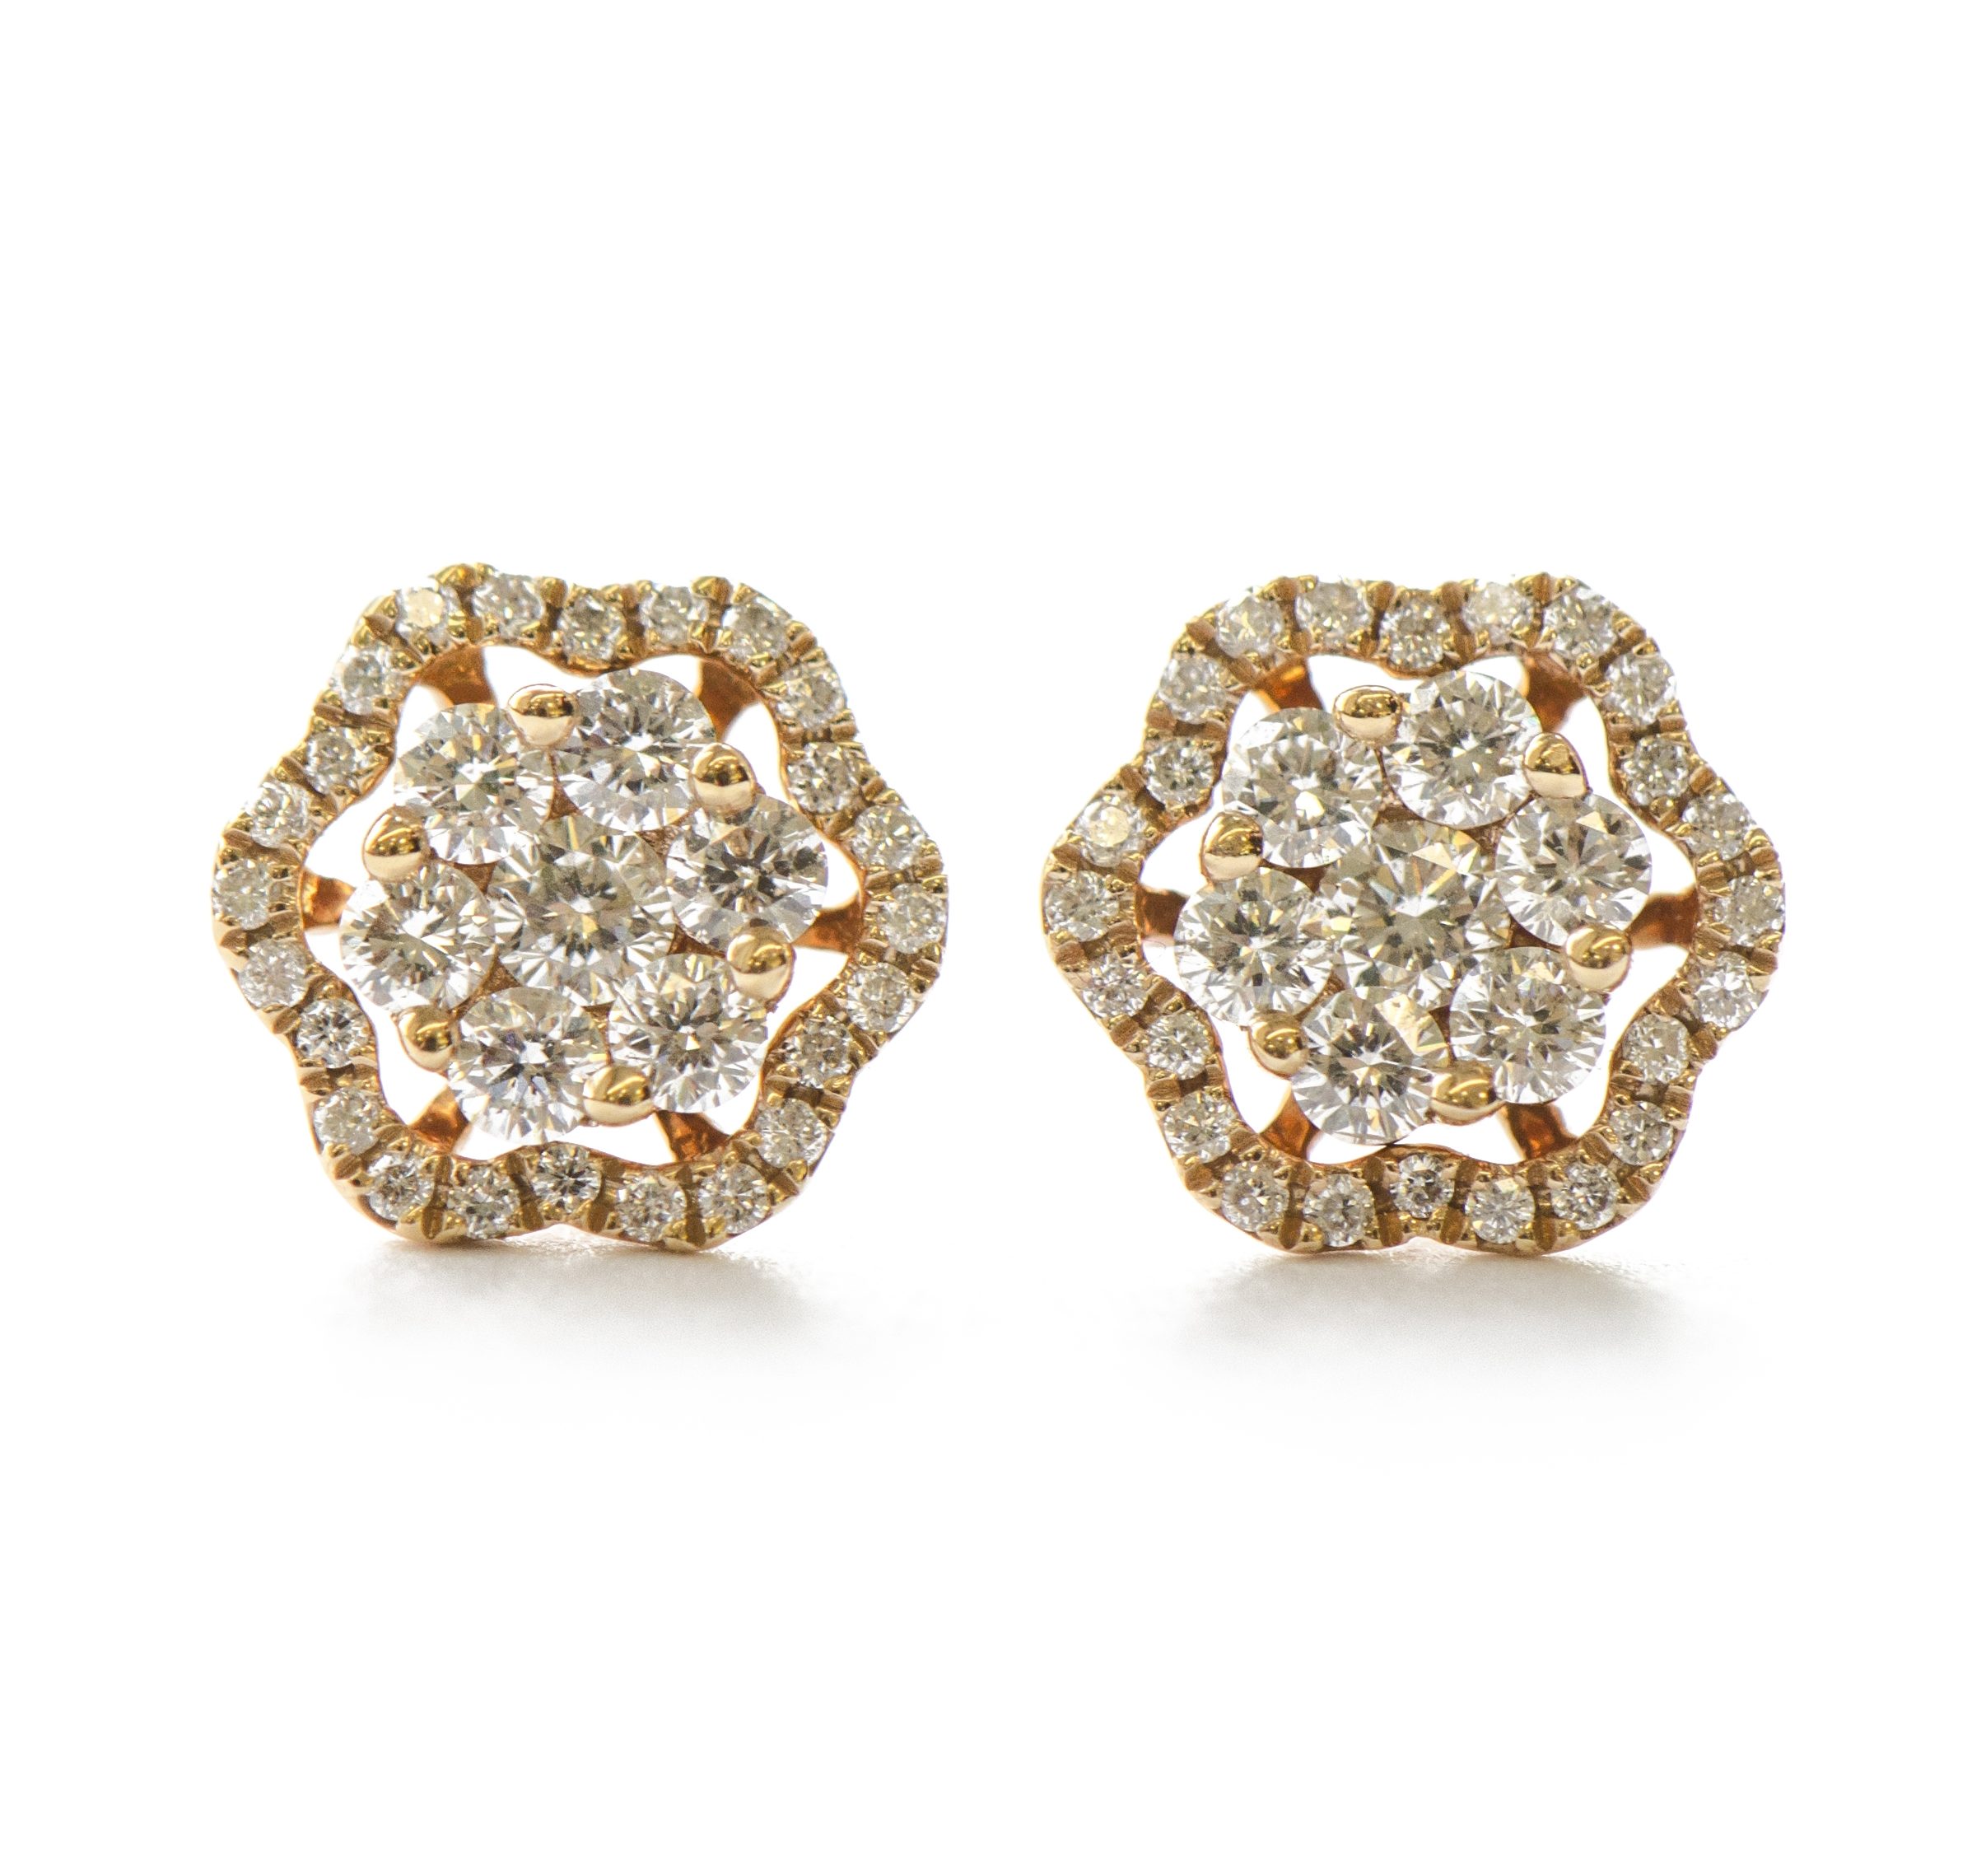 Diamond Earrings with Jackets | Sandler's Diamonds & Time | Columbia SC ...